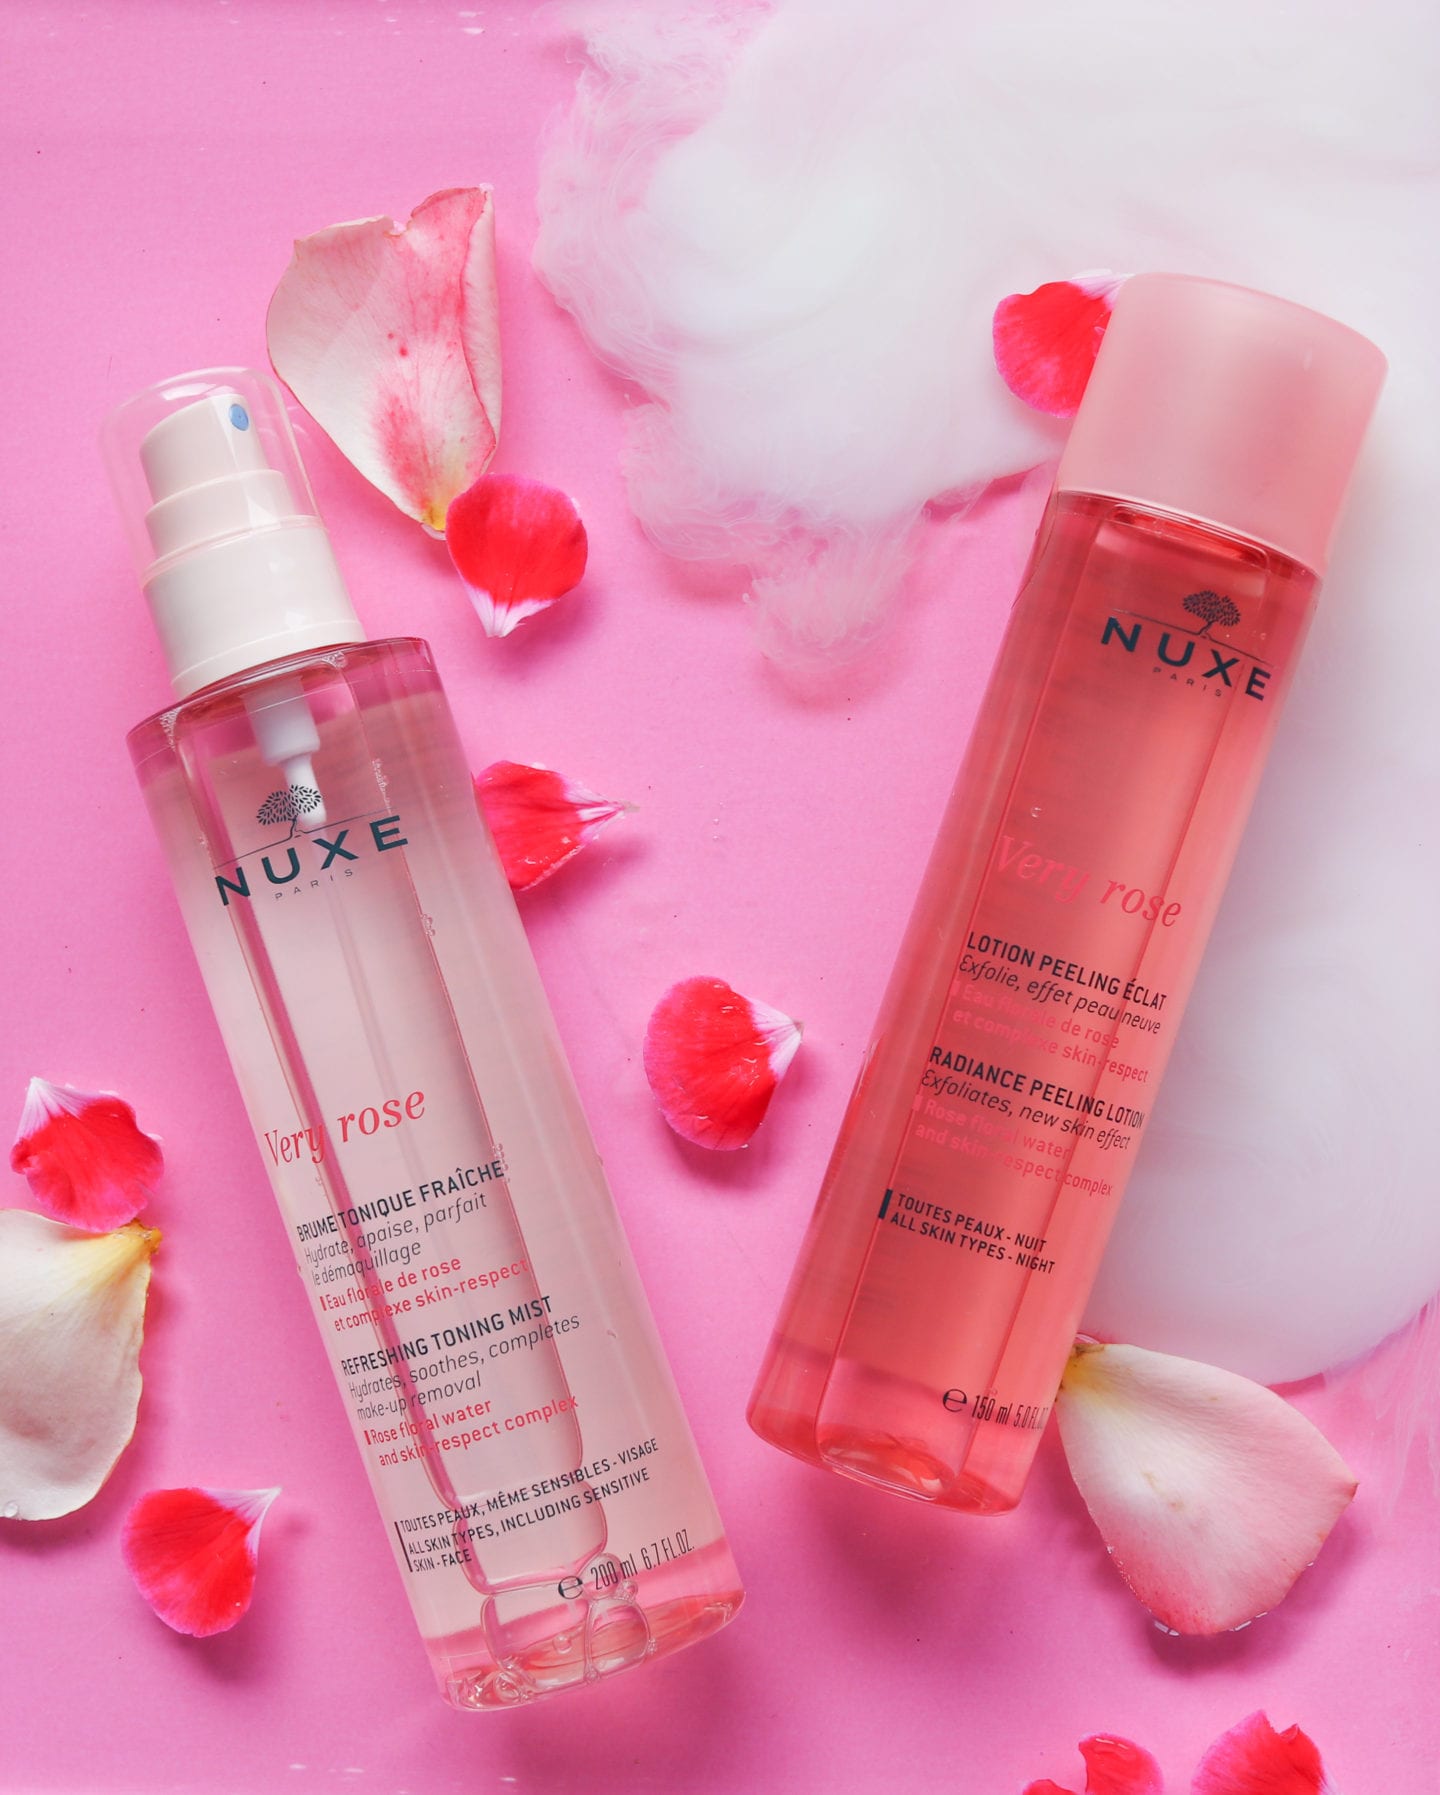 Nuxe Very Rose Refreshing Toning Mist Radiance Peeling Lotion